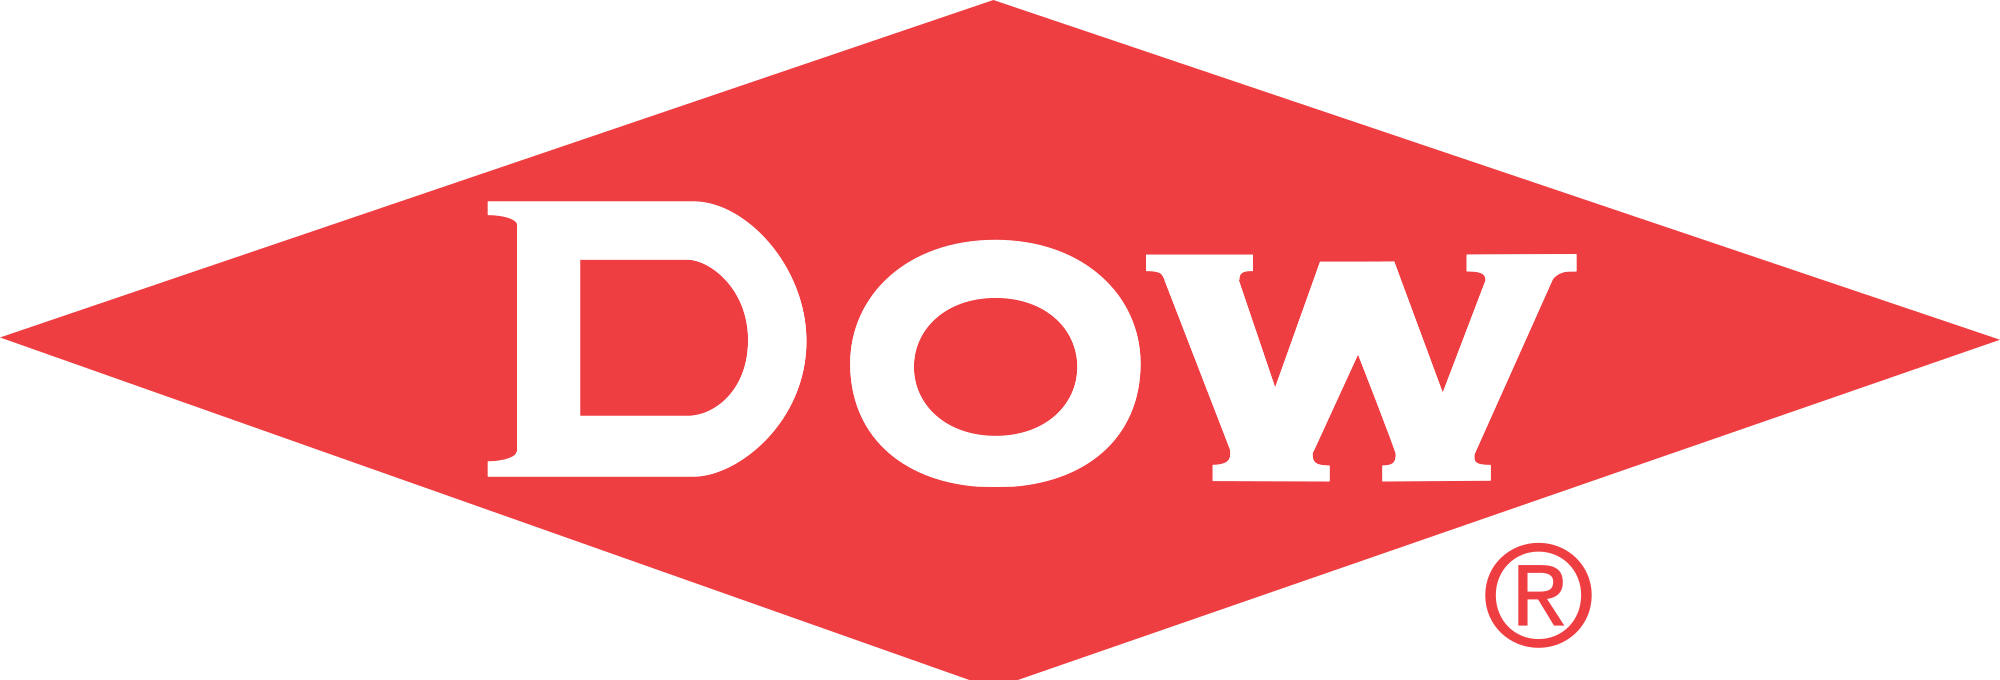 Chemical Company Logo - Dow Chemical Company logo.svg